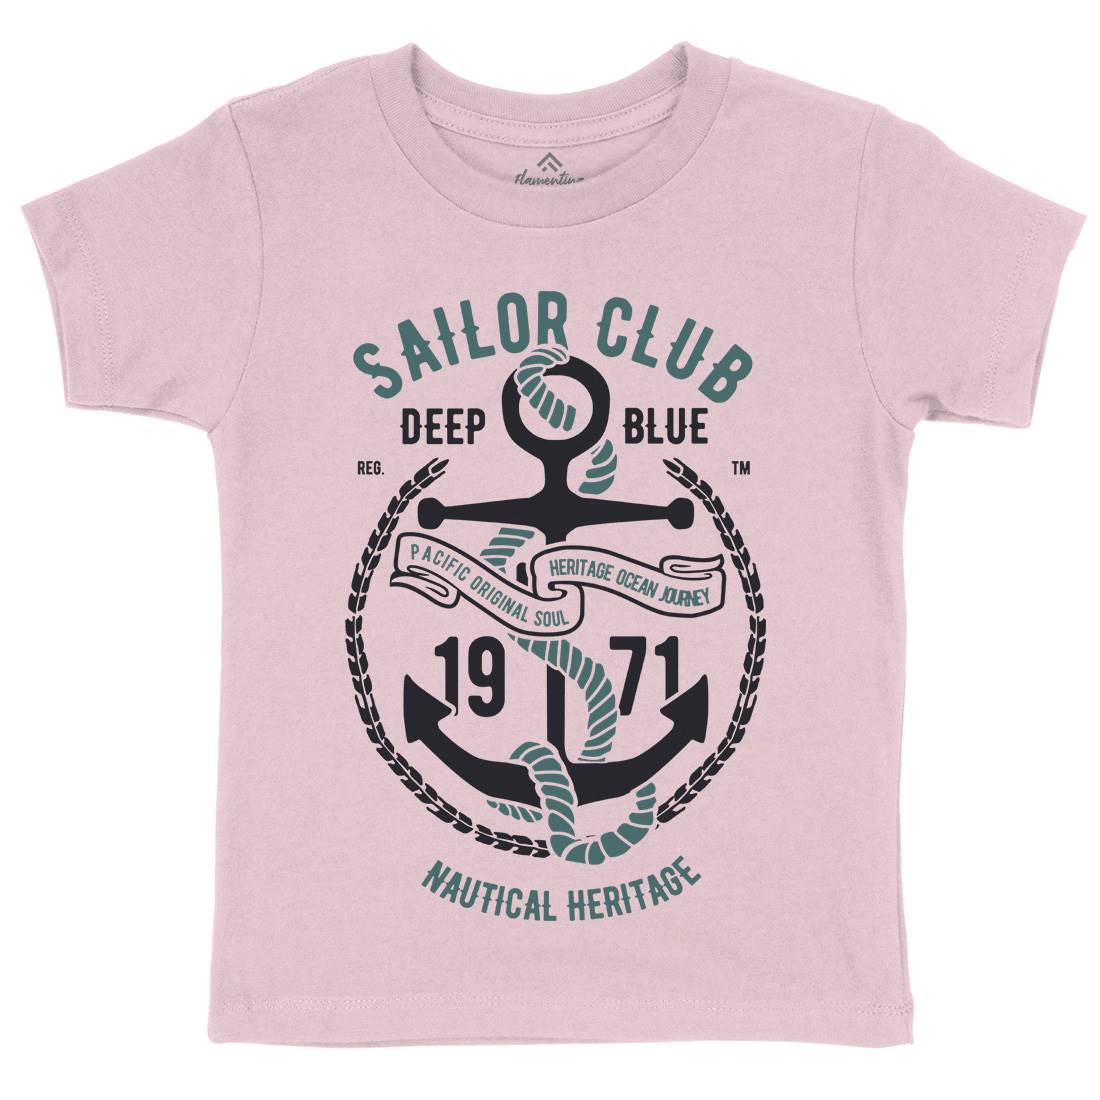 Sailor Club Kids Crew Neck T-Shirt Navy B445